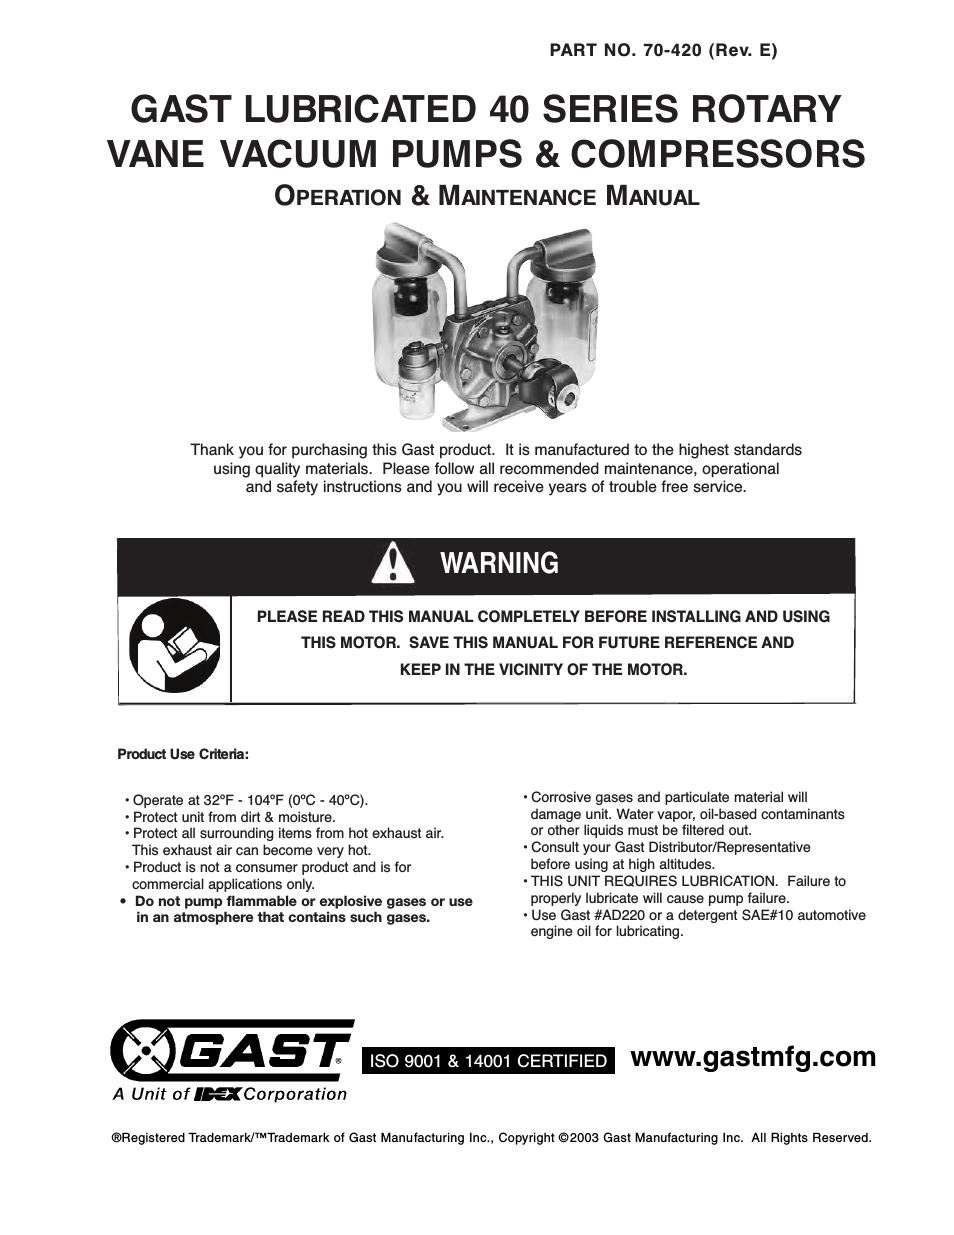 0740 Series Lubricated Vacuum Pumps and Comressors